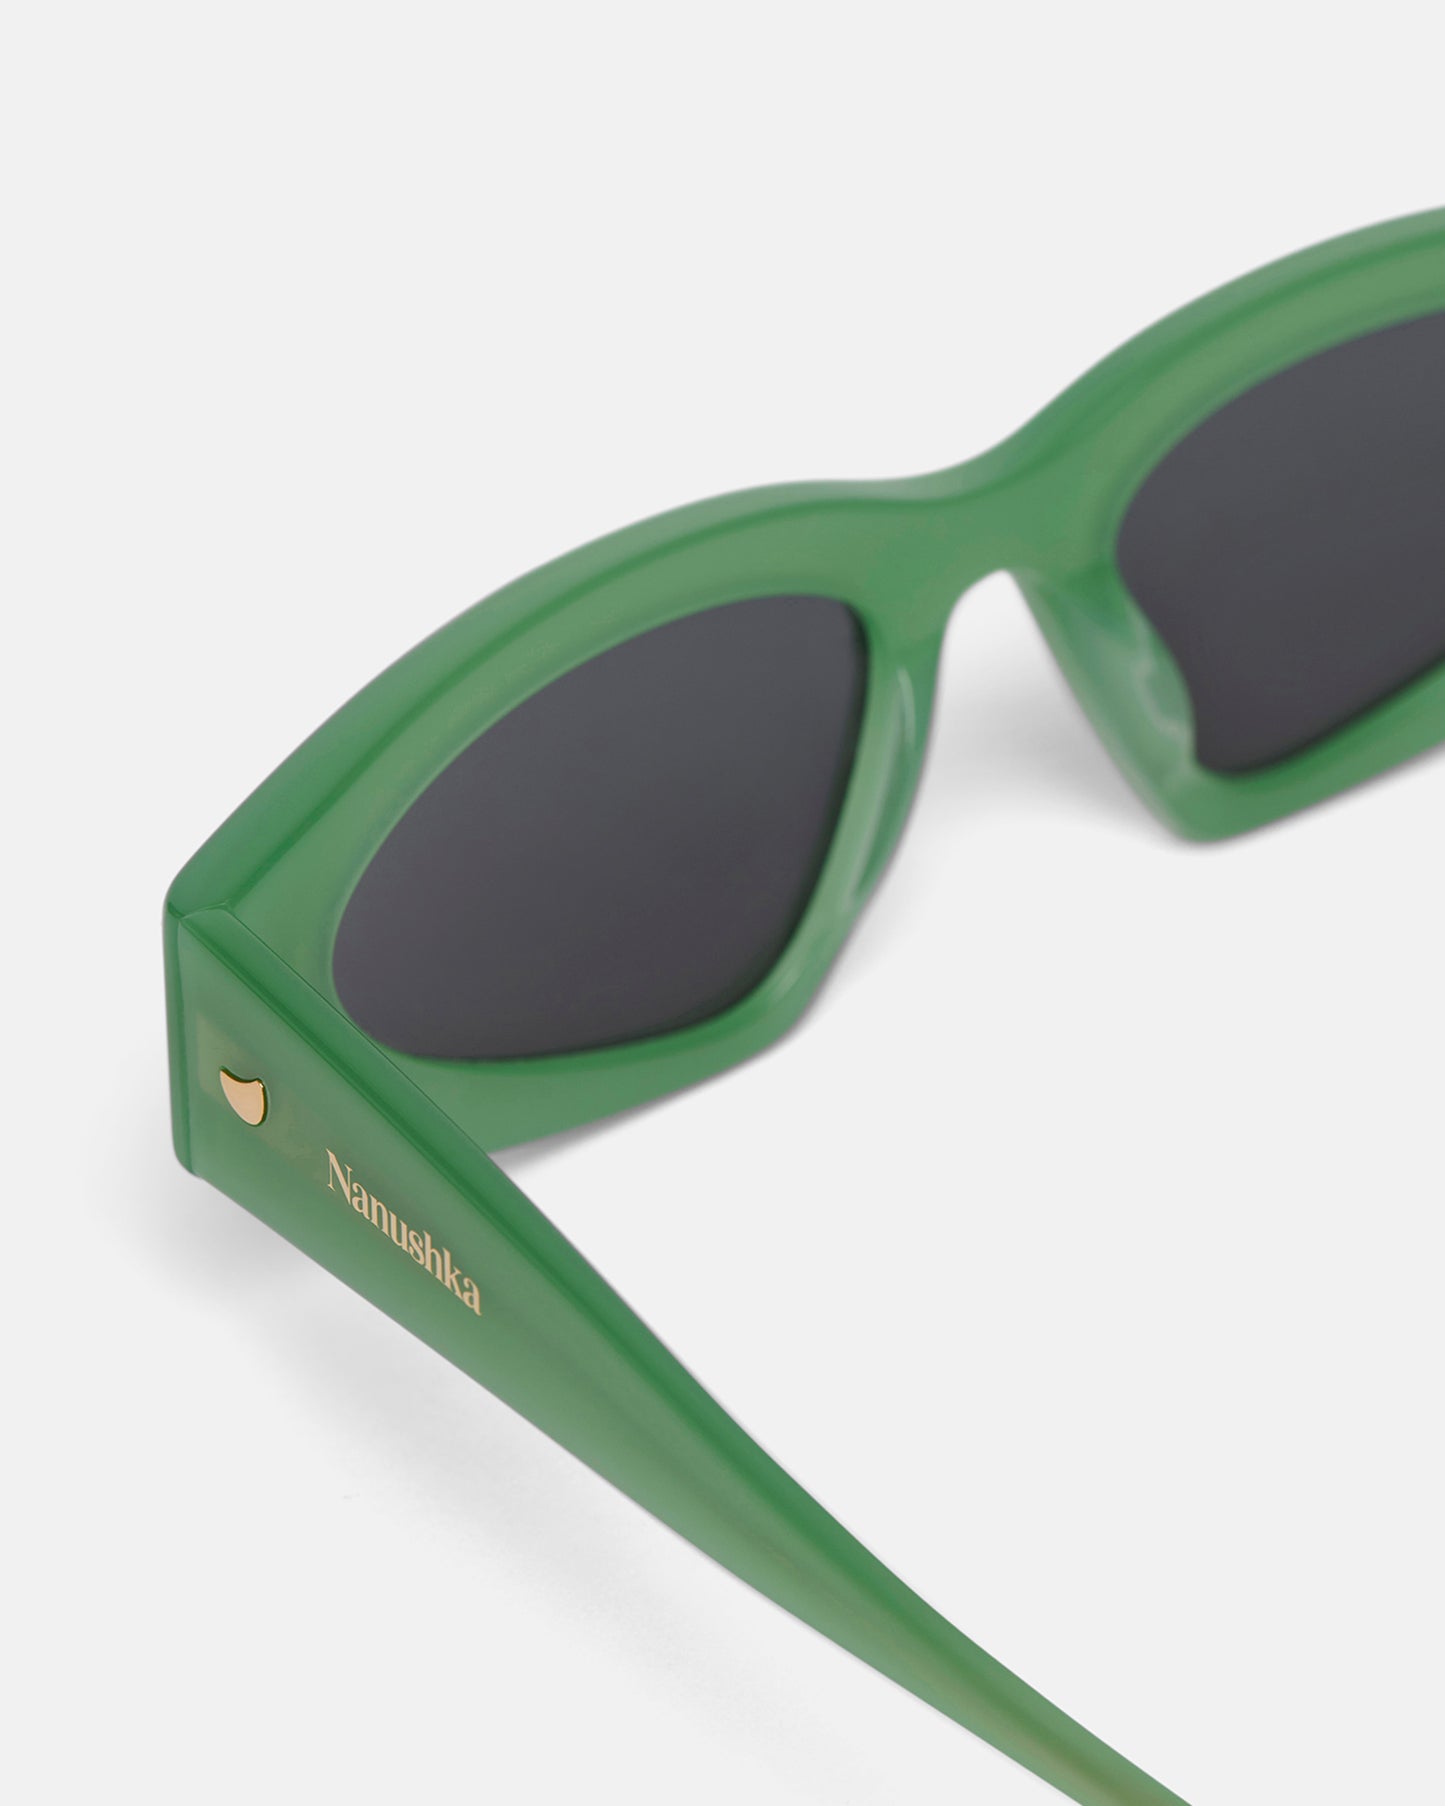 Crista - Bio-Plastic D-Frame Sunglasses - Green